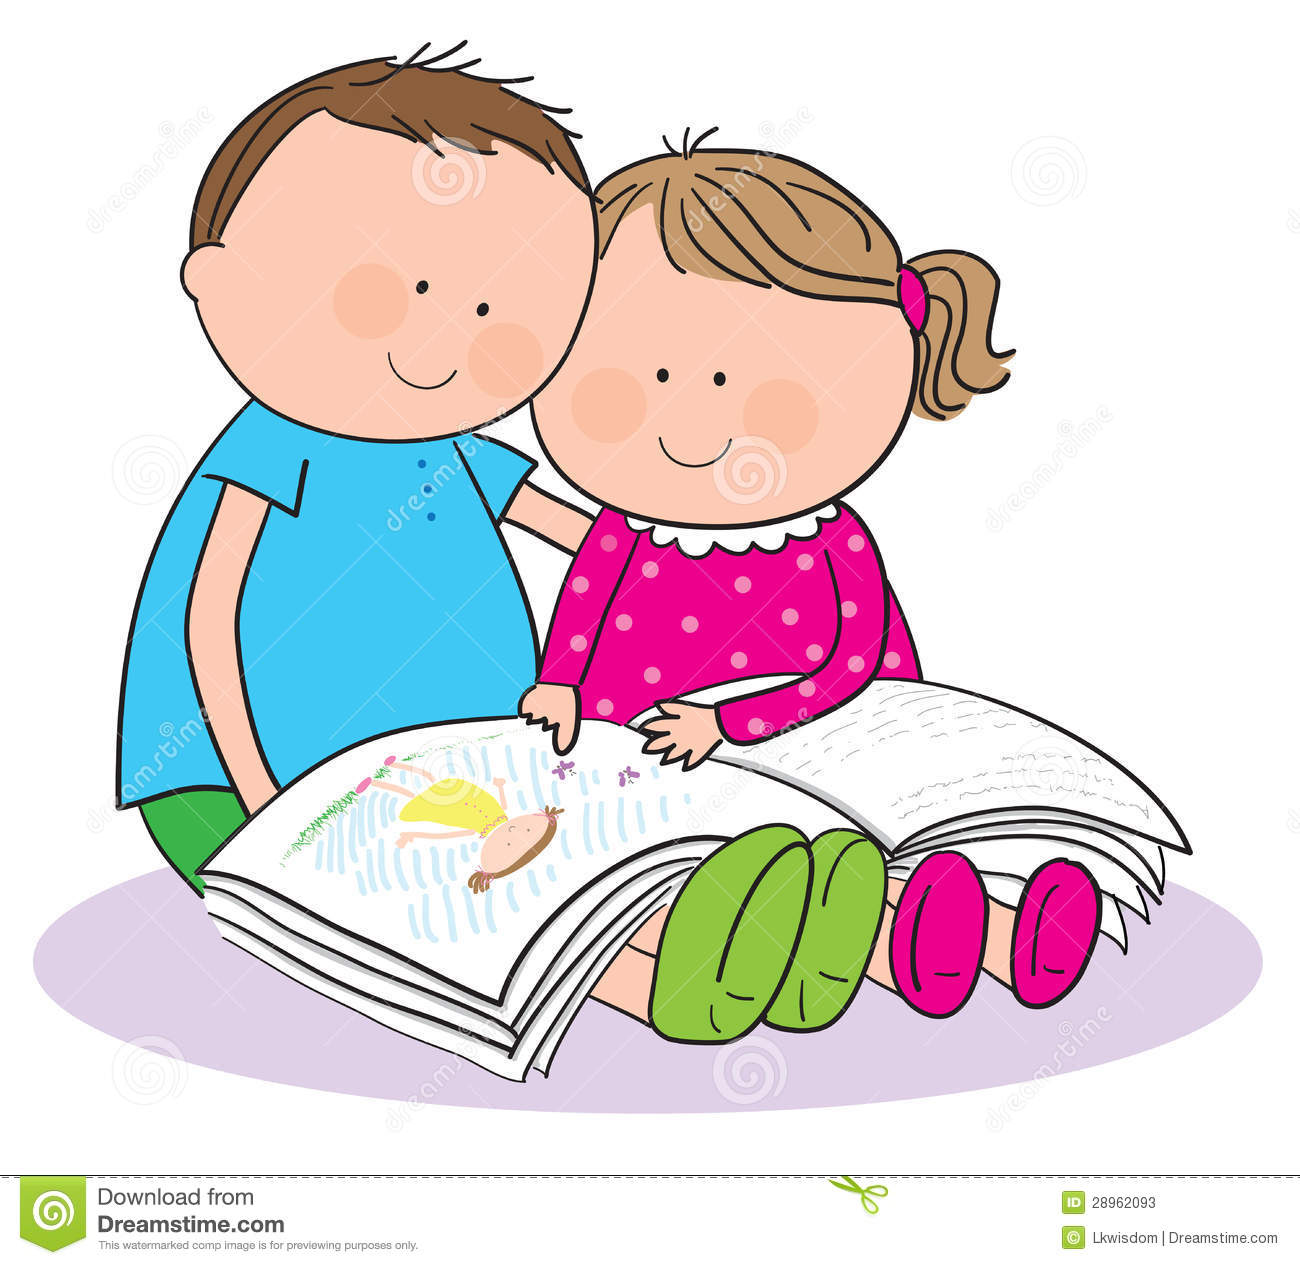 children-reading-book-28962093.jpg